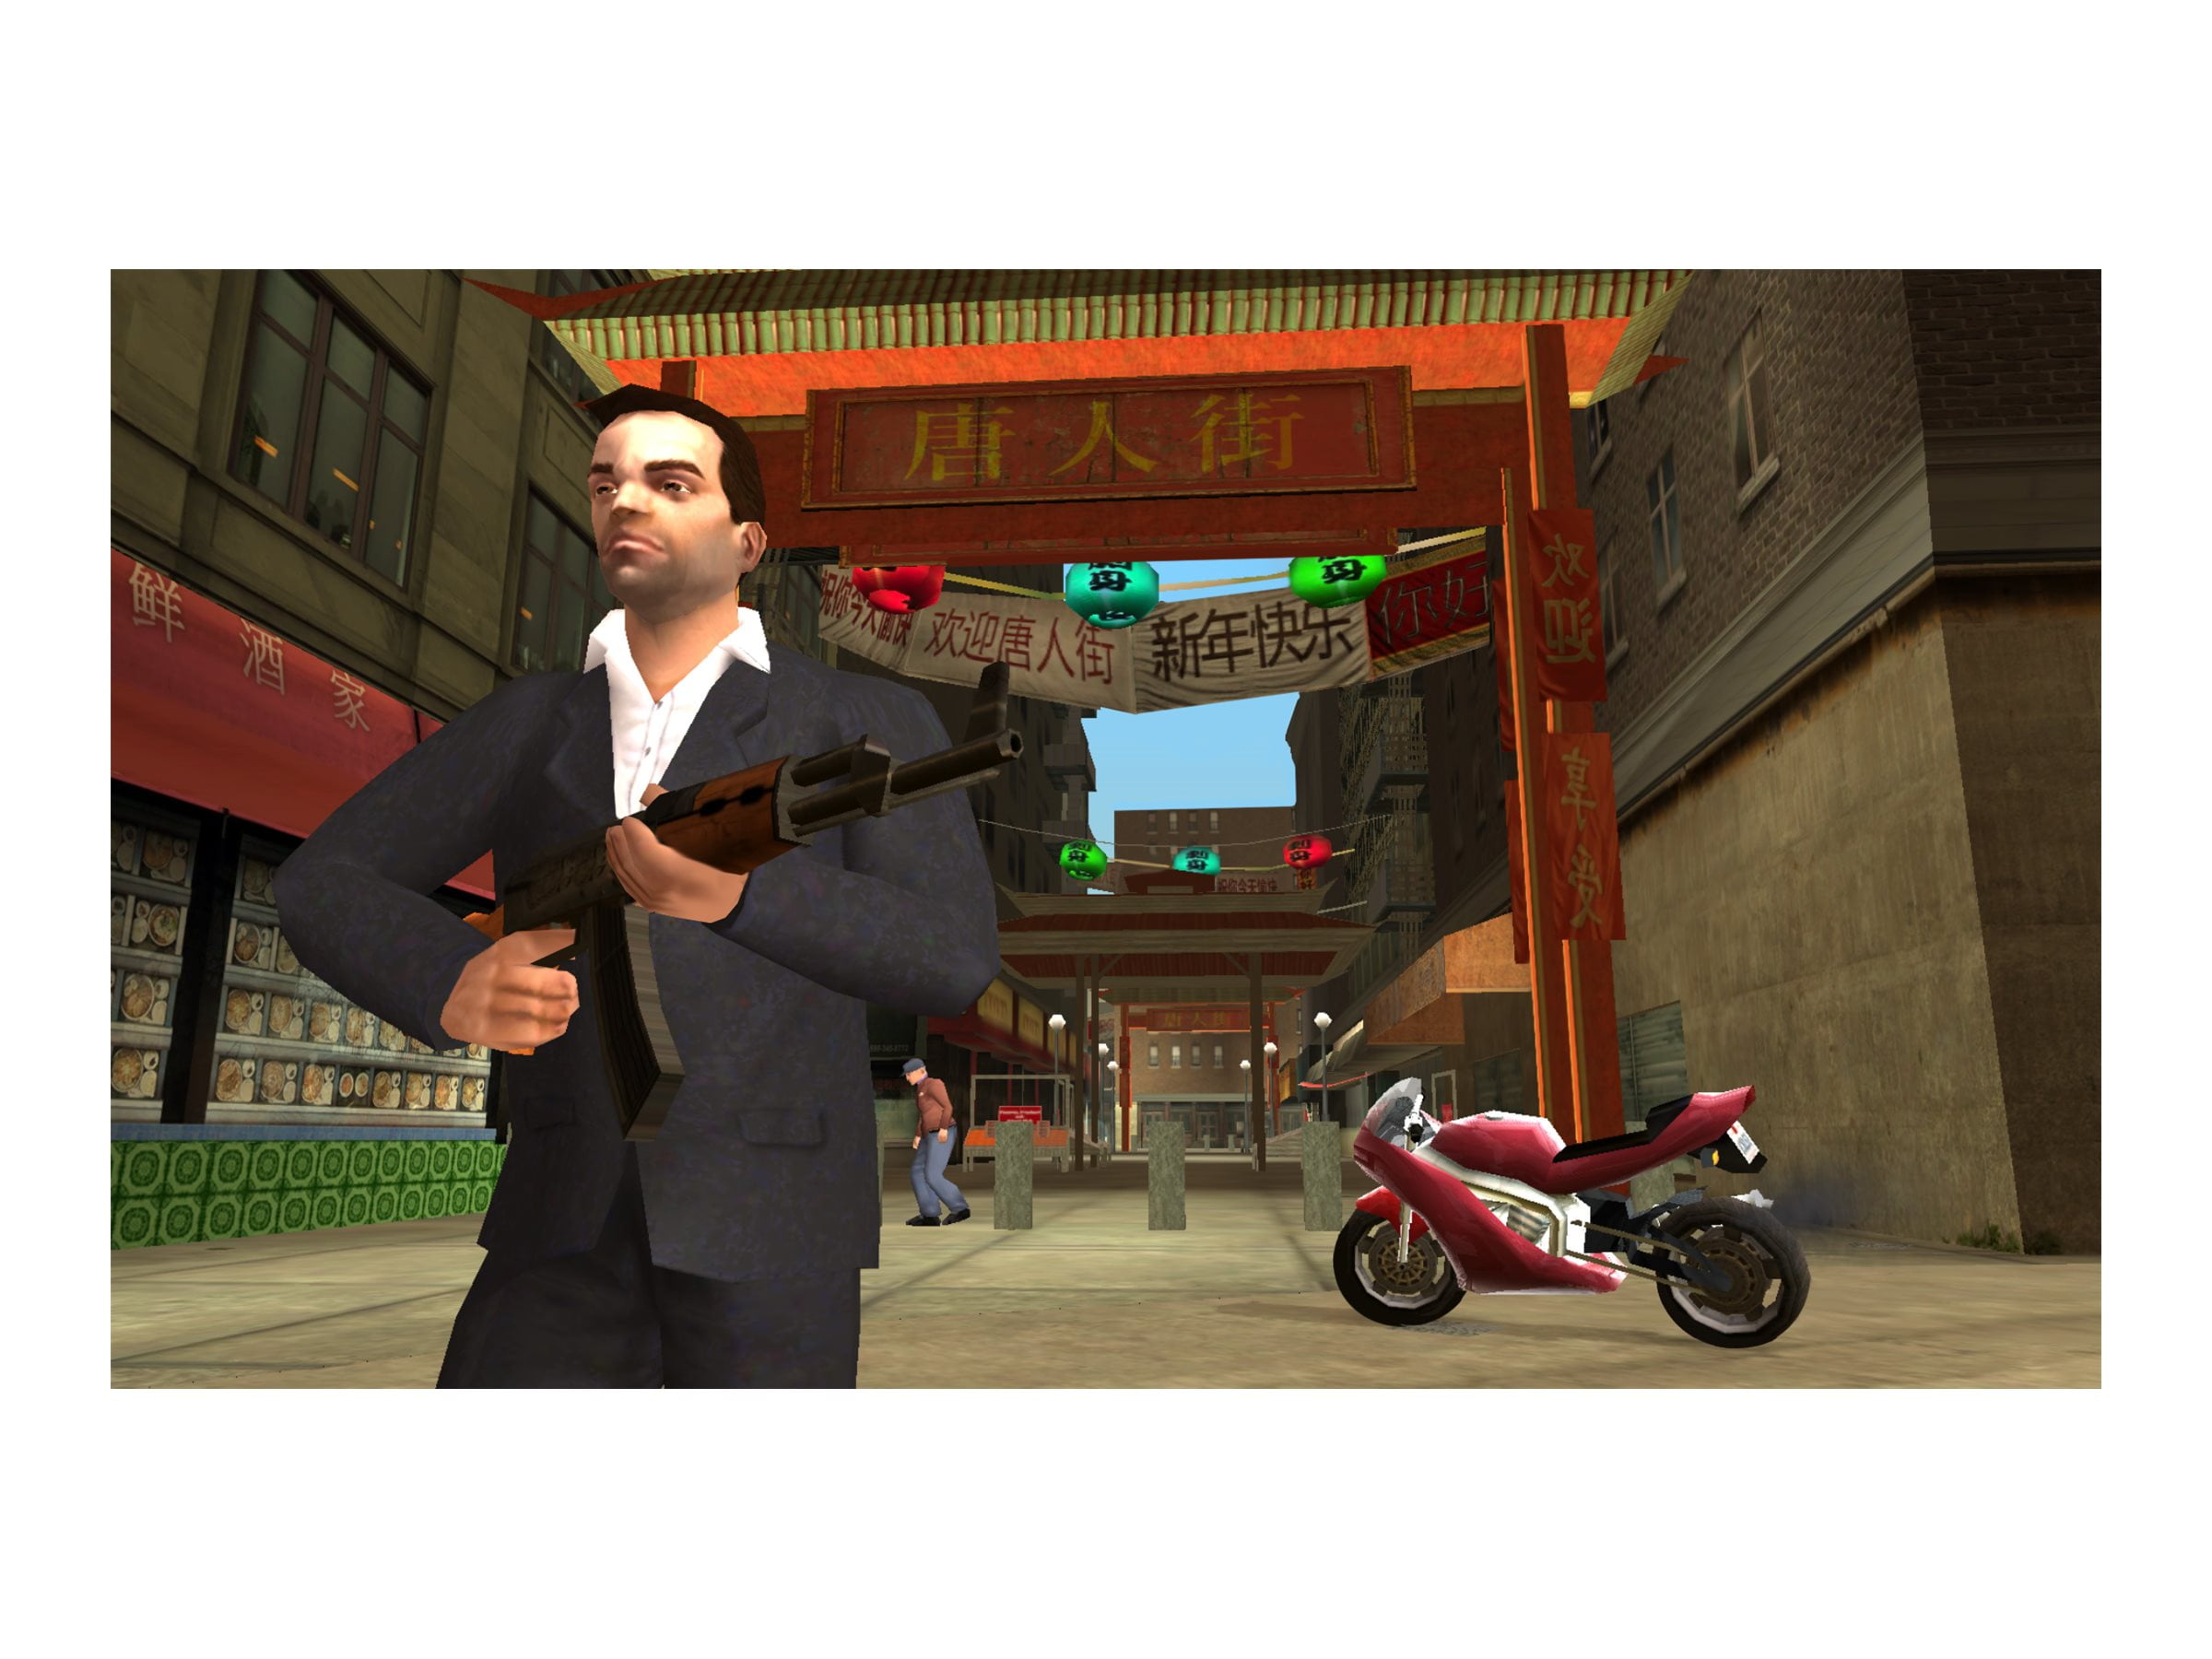 PO.B.R.E - Traduções - Playstation 2 Grand Theft Auto - Liberty City Stories  (Tecno Tradu BR)